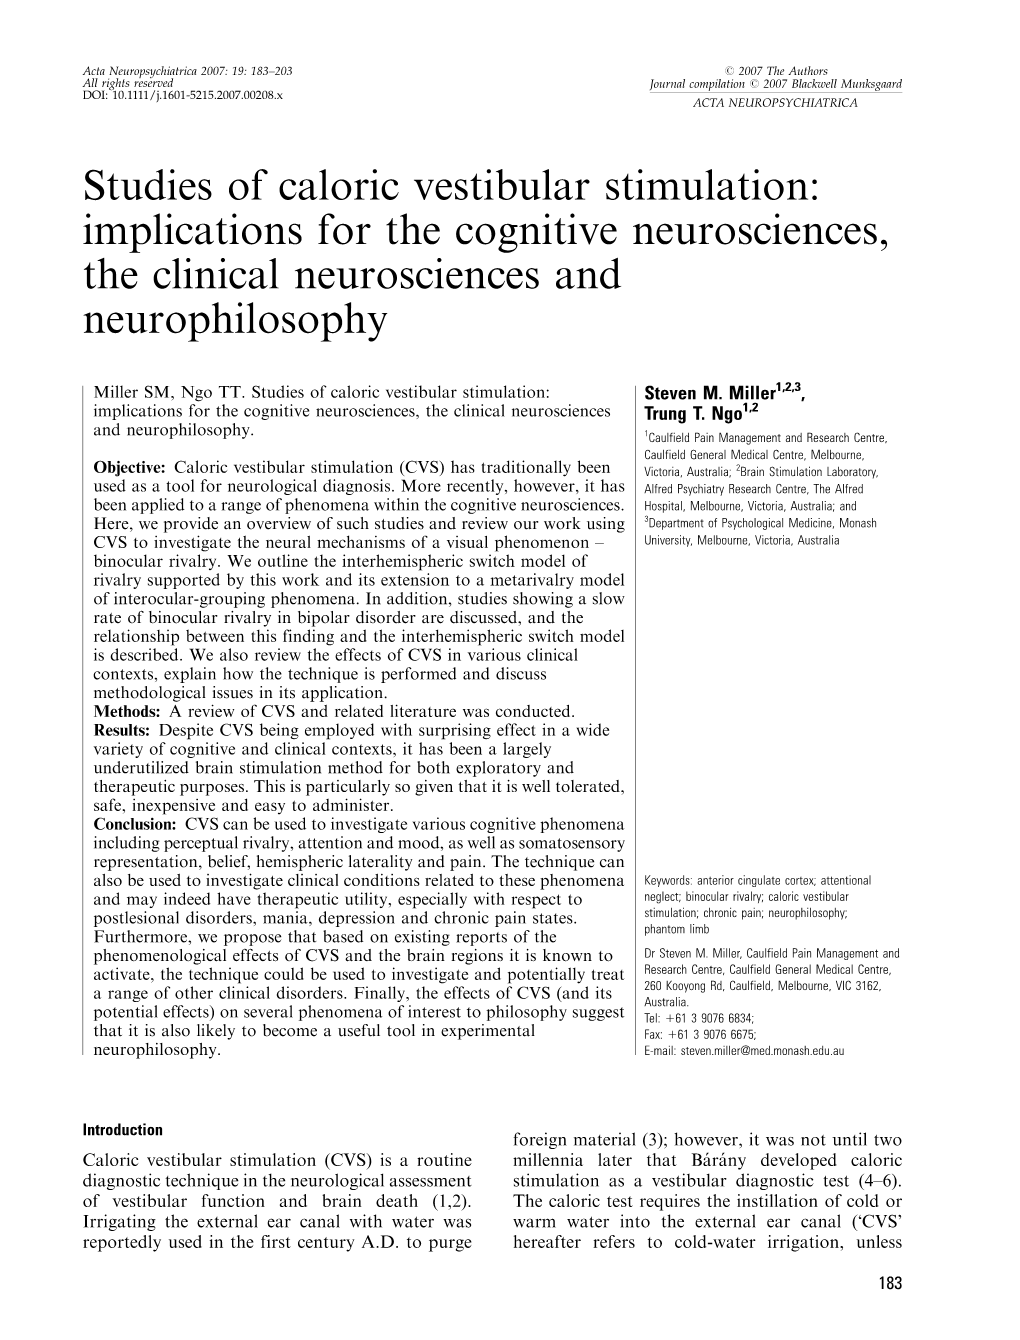 Studies of Caloric Vestibular Stimulation: Implications for the Cognitive Neurosciences, the Clinical Neurosciences and Neurophilosophy